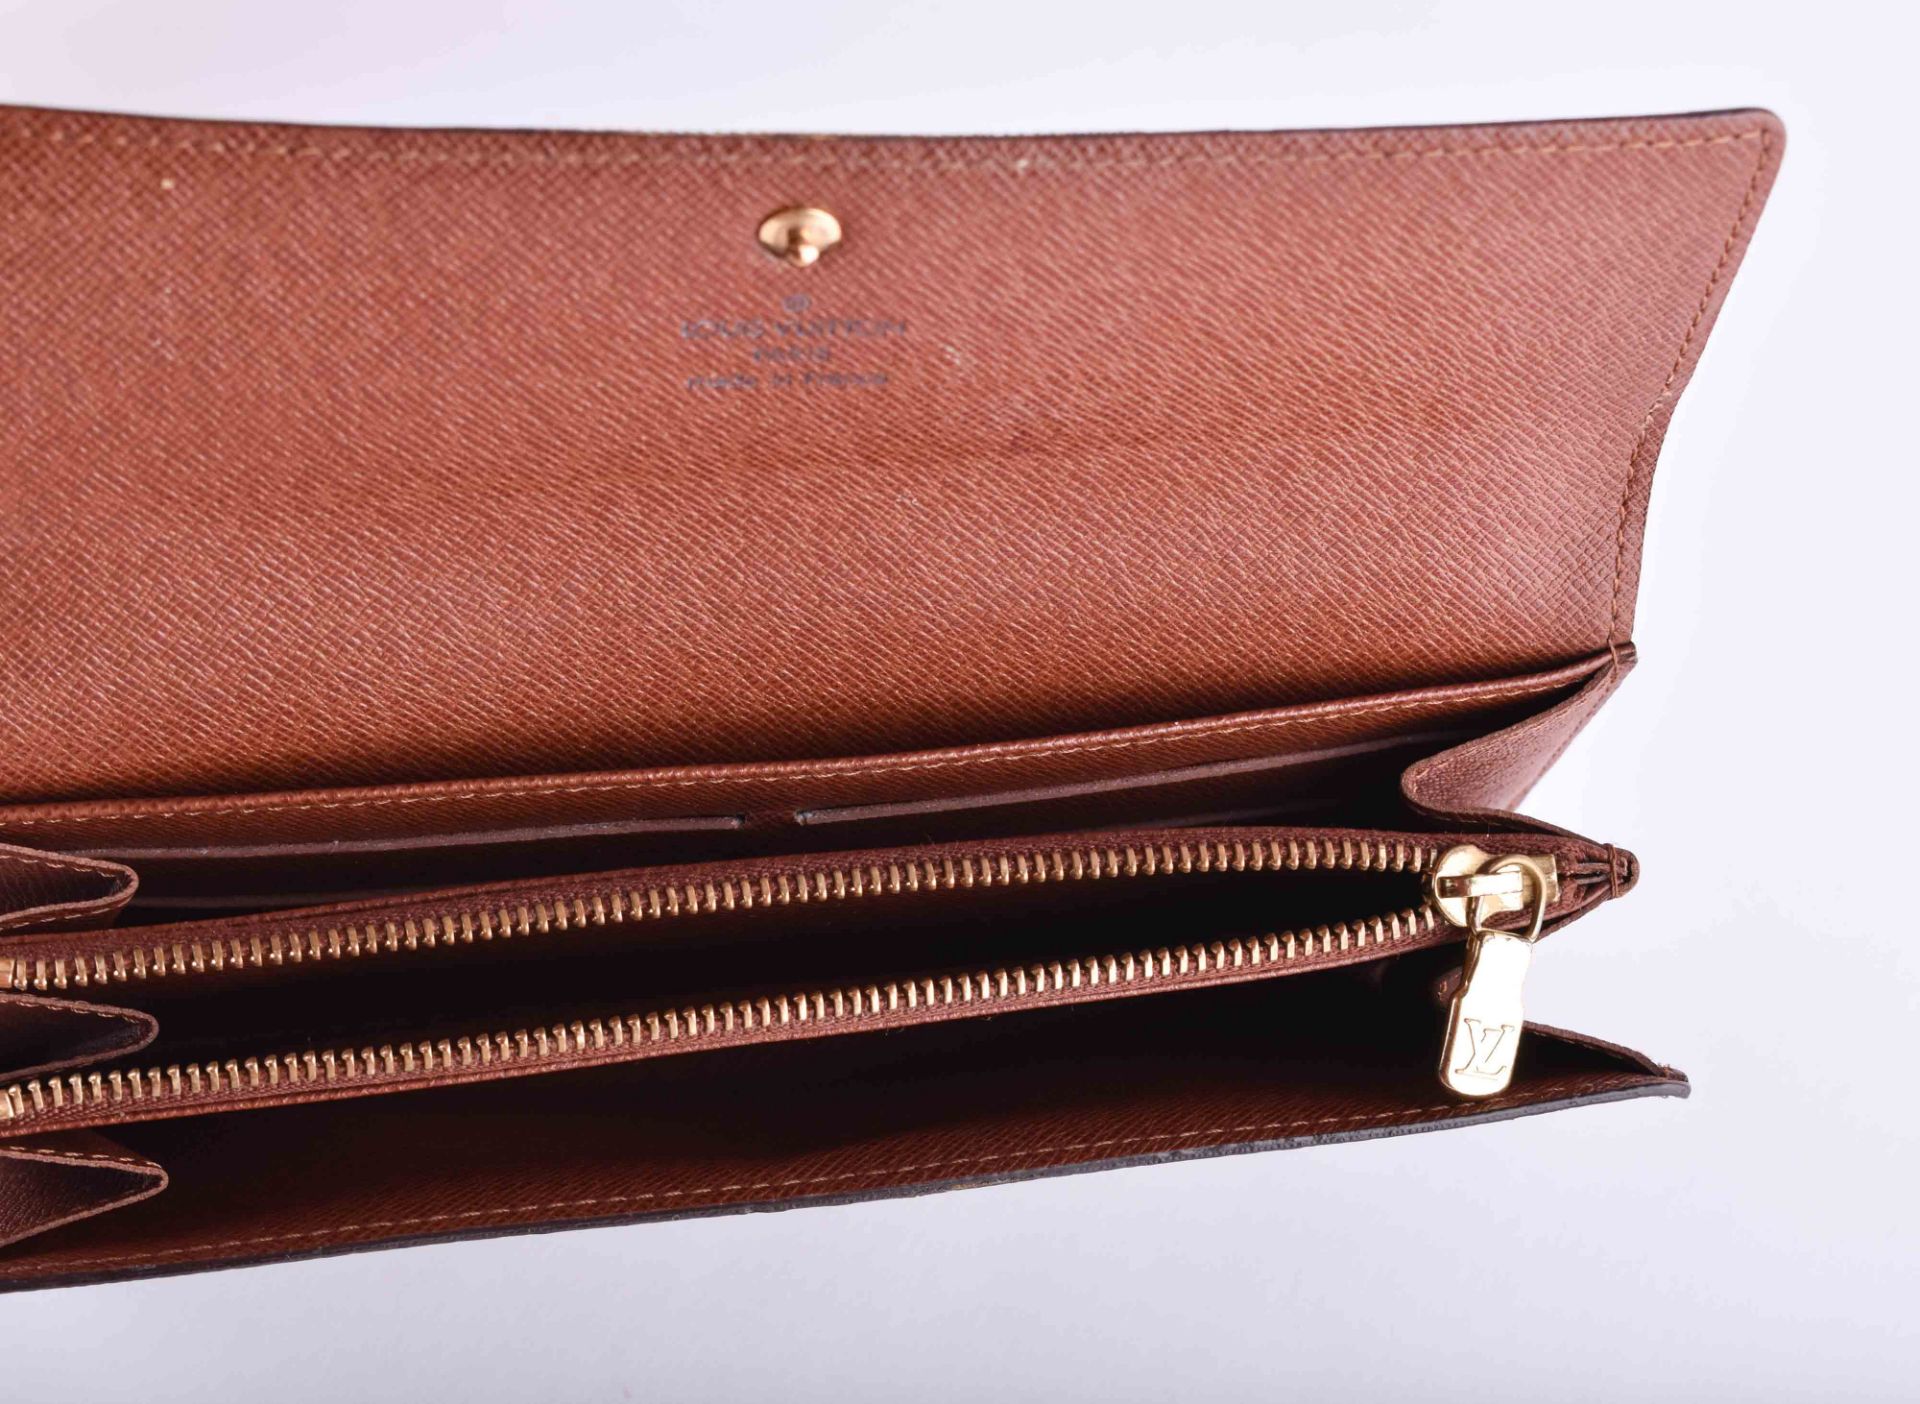  Louis Vuitton wallet - Image 3 of 6